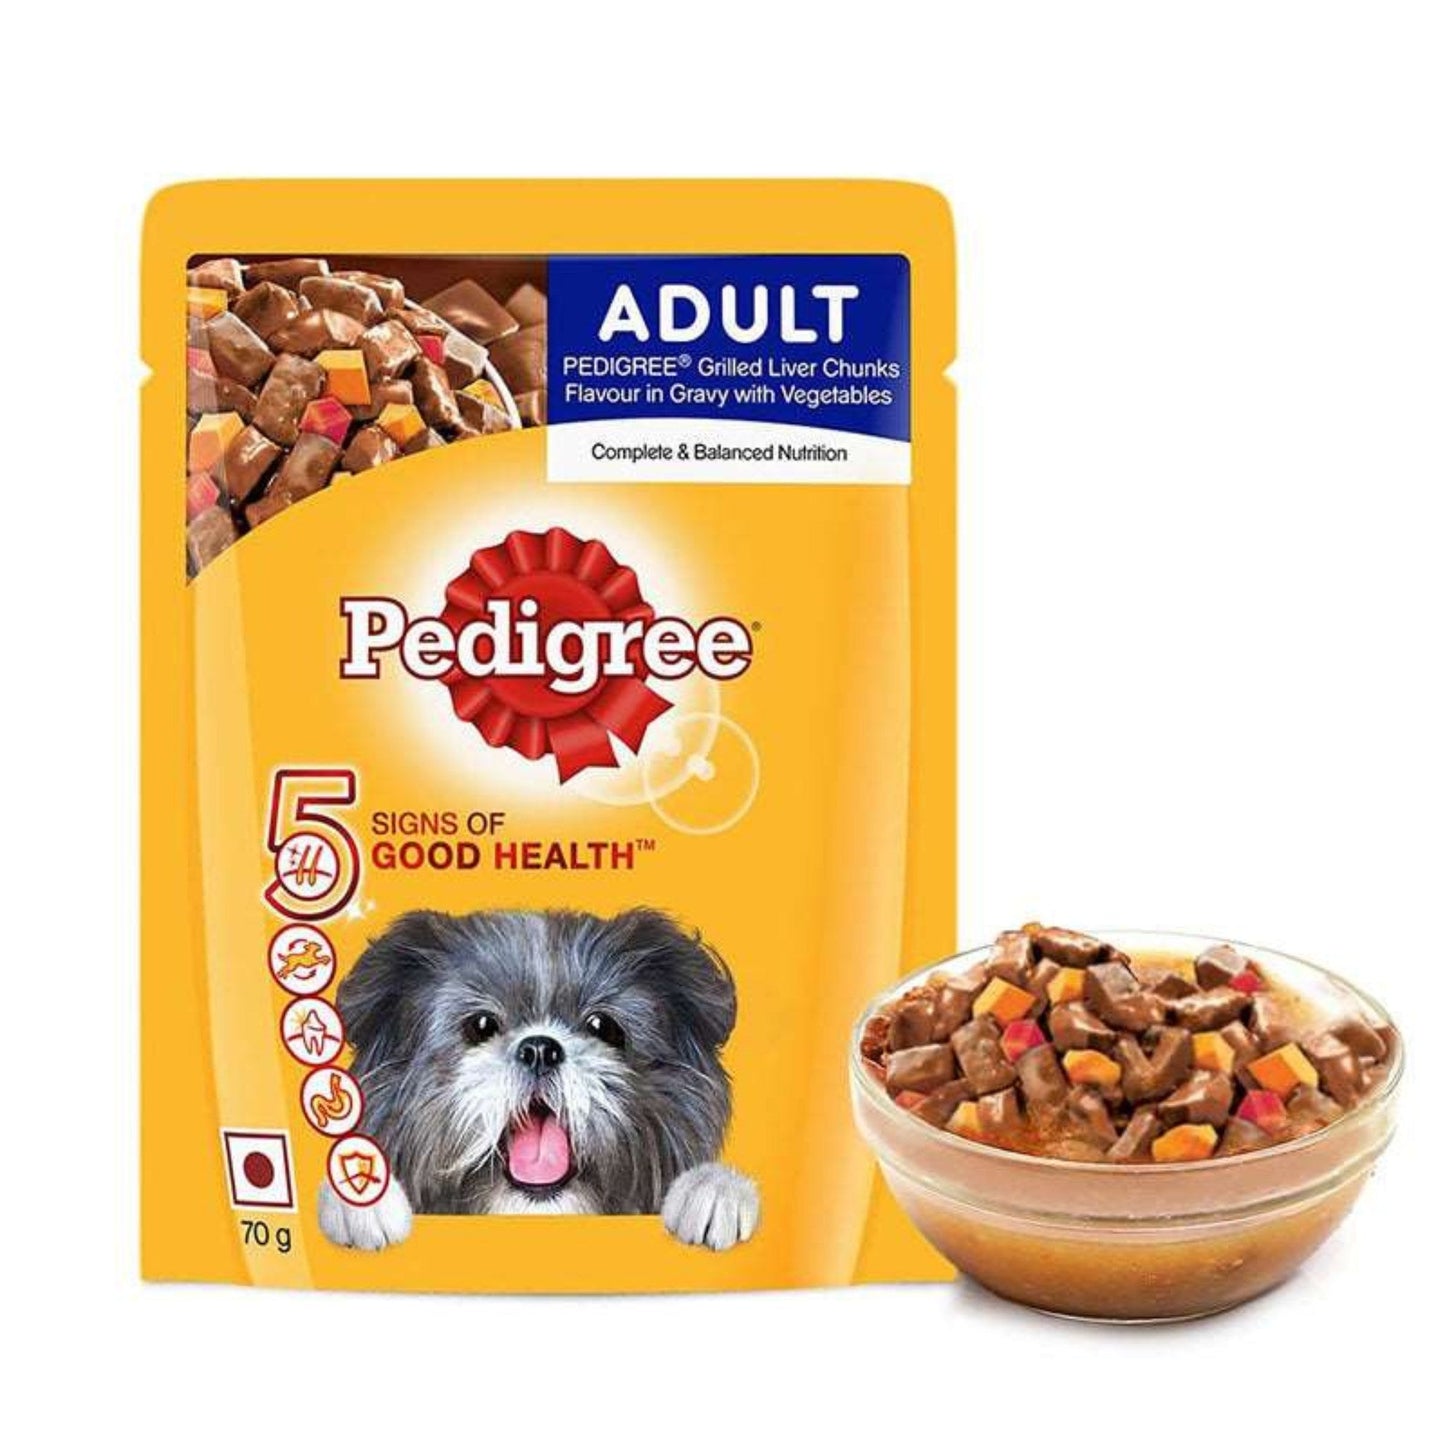 Pedigree Adult Dog Food, Grilled Liver Chunks in Gravy 70g, Pack of 75